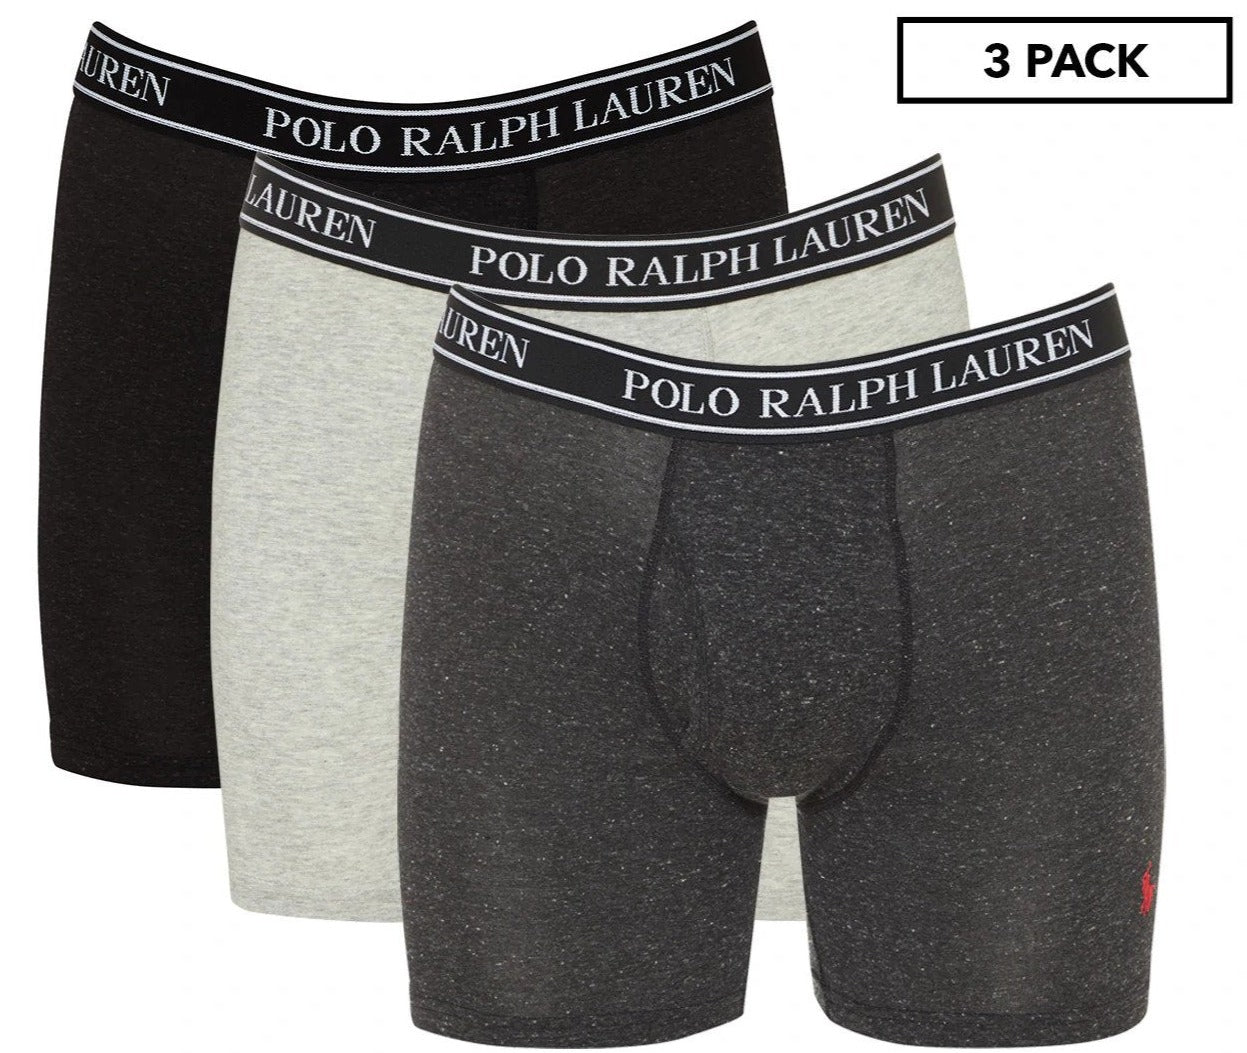 Polo Ralph Lauren Men's Stretch Classic Fit Boxer Briefs 3-Pack - Black/Dark Grey/Grey